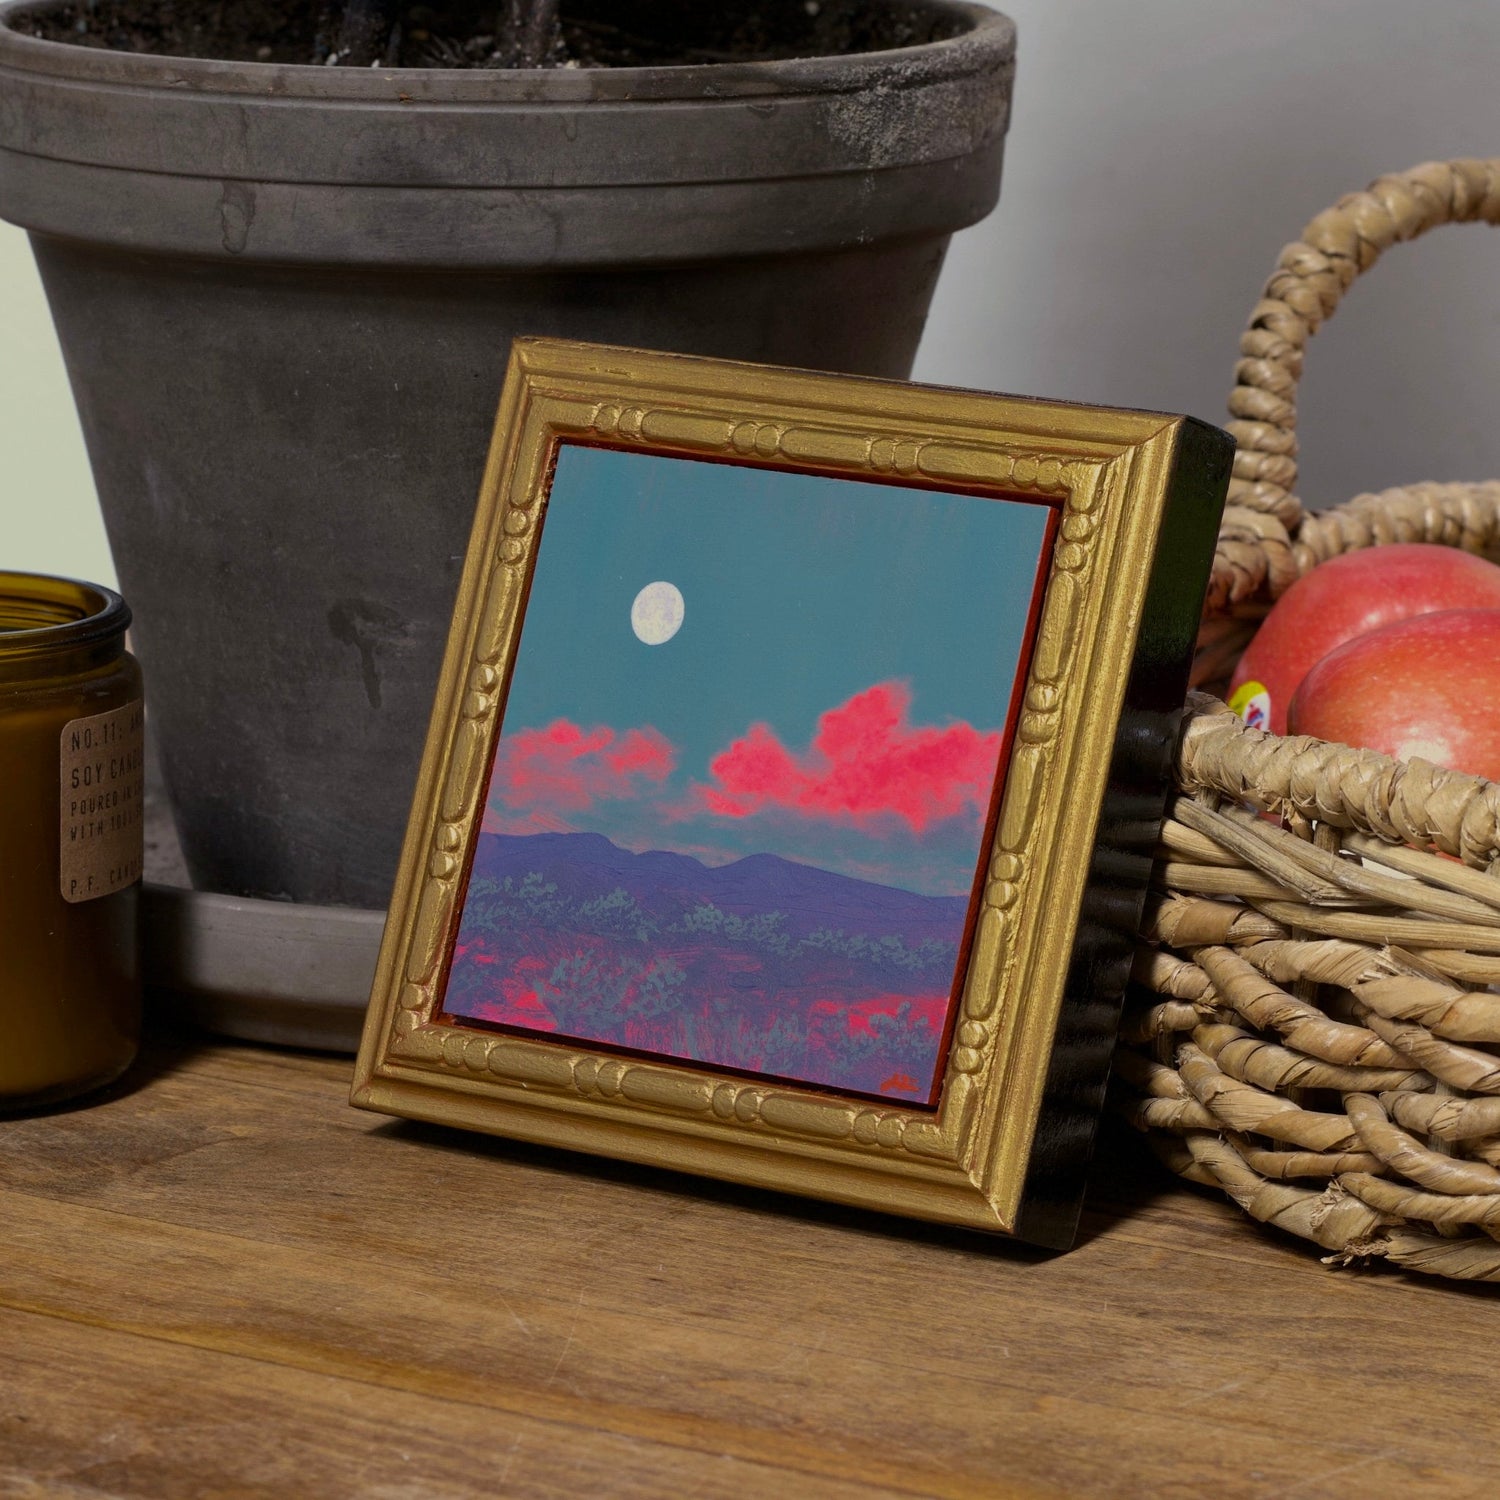 Jemez Miniature Series 3, No.2 - Original Southwest Landscape Oil Painting - 4 x 4 inches in handmade wooden frame